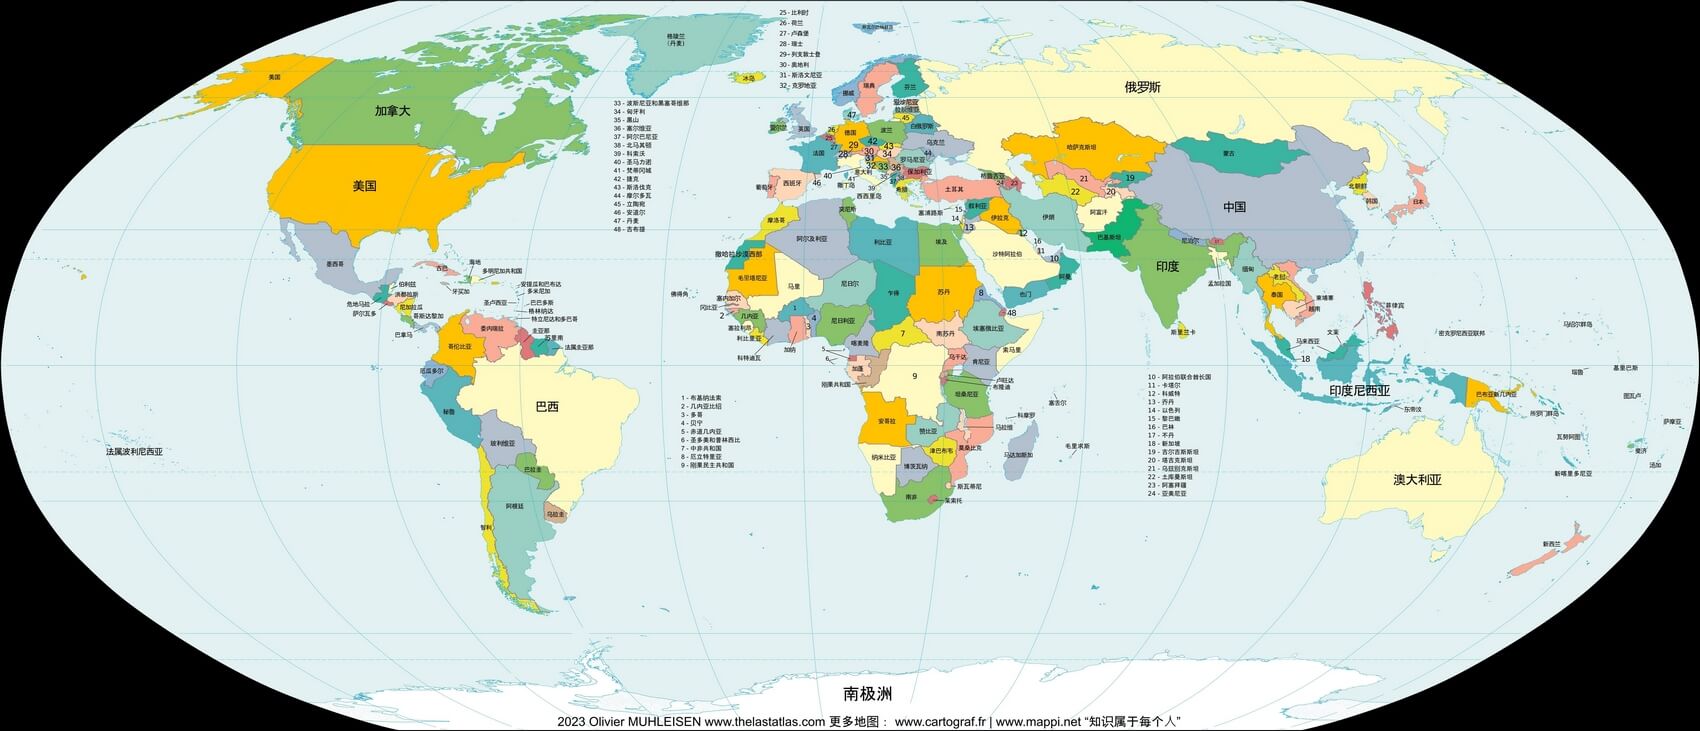 Mapa mundi com países em chinês